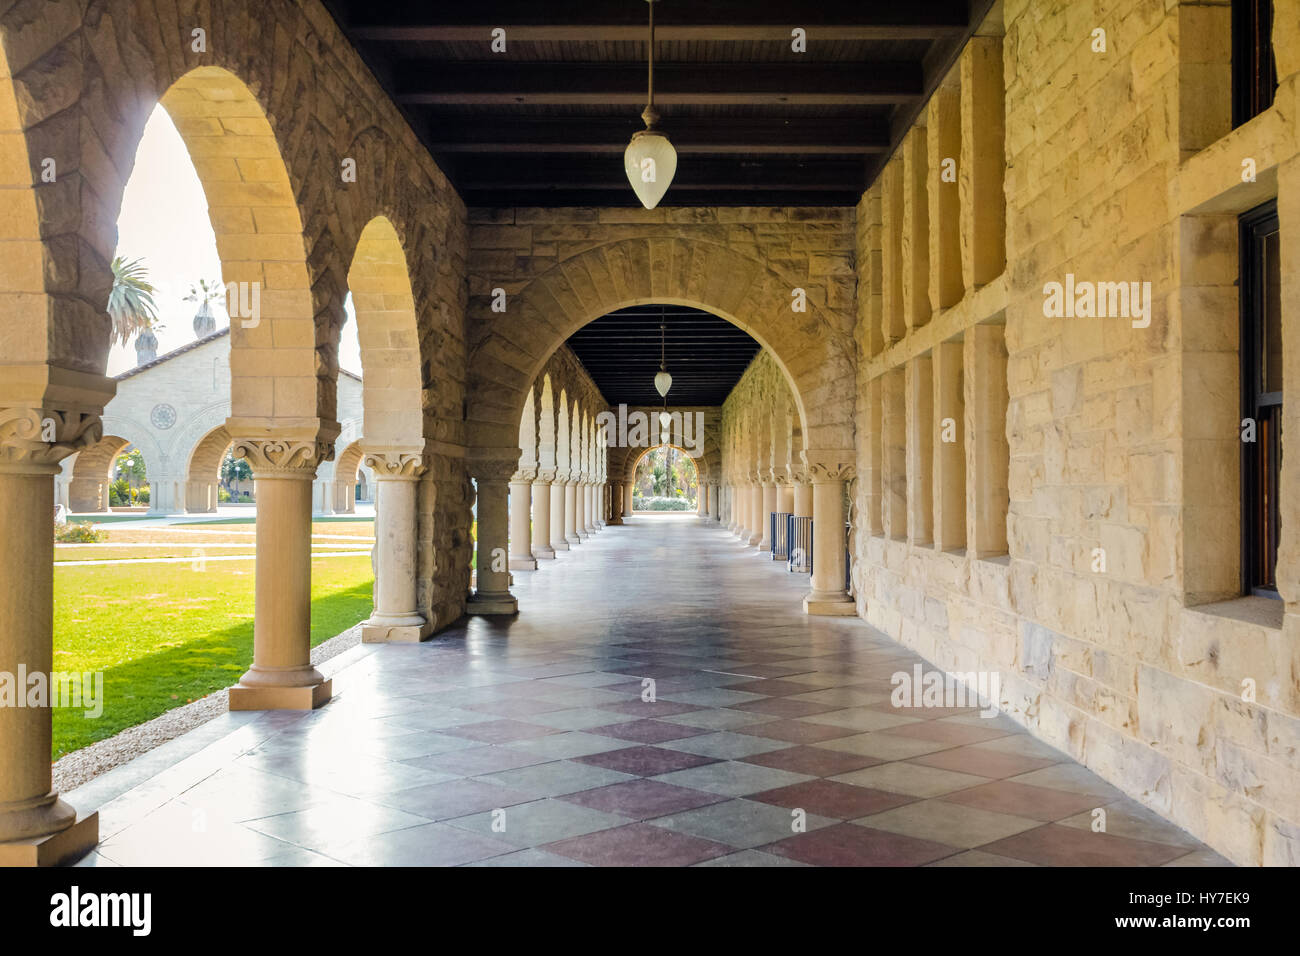 PALO ALTO, USA - January 11, 2017: Arches of Main Quad at Stanford University Campus - Palo Alto, California, USA Stock Photo